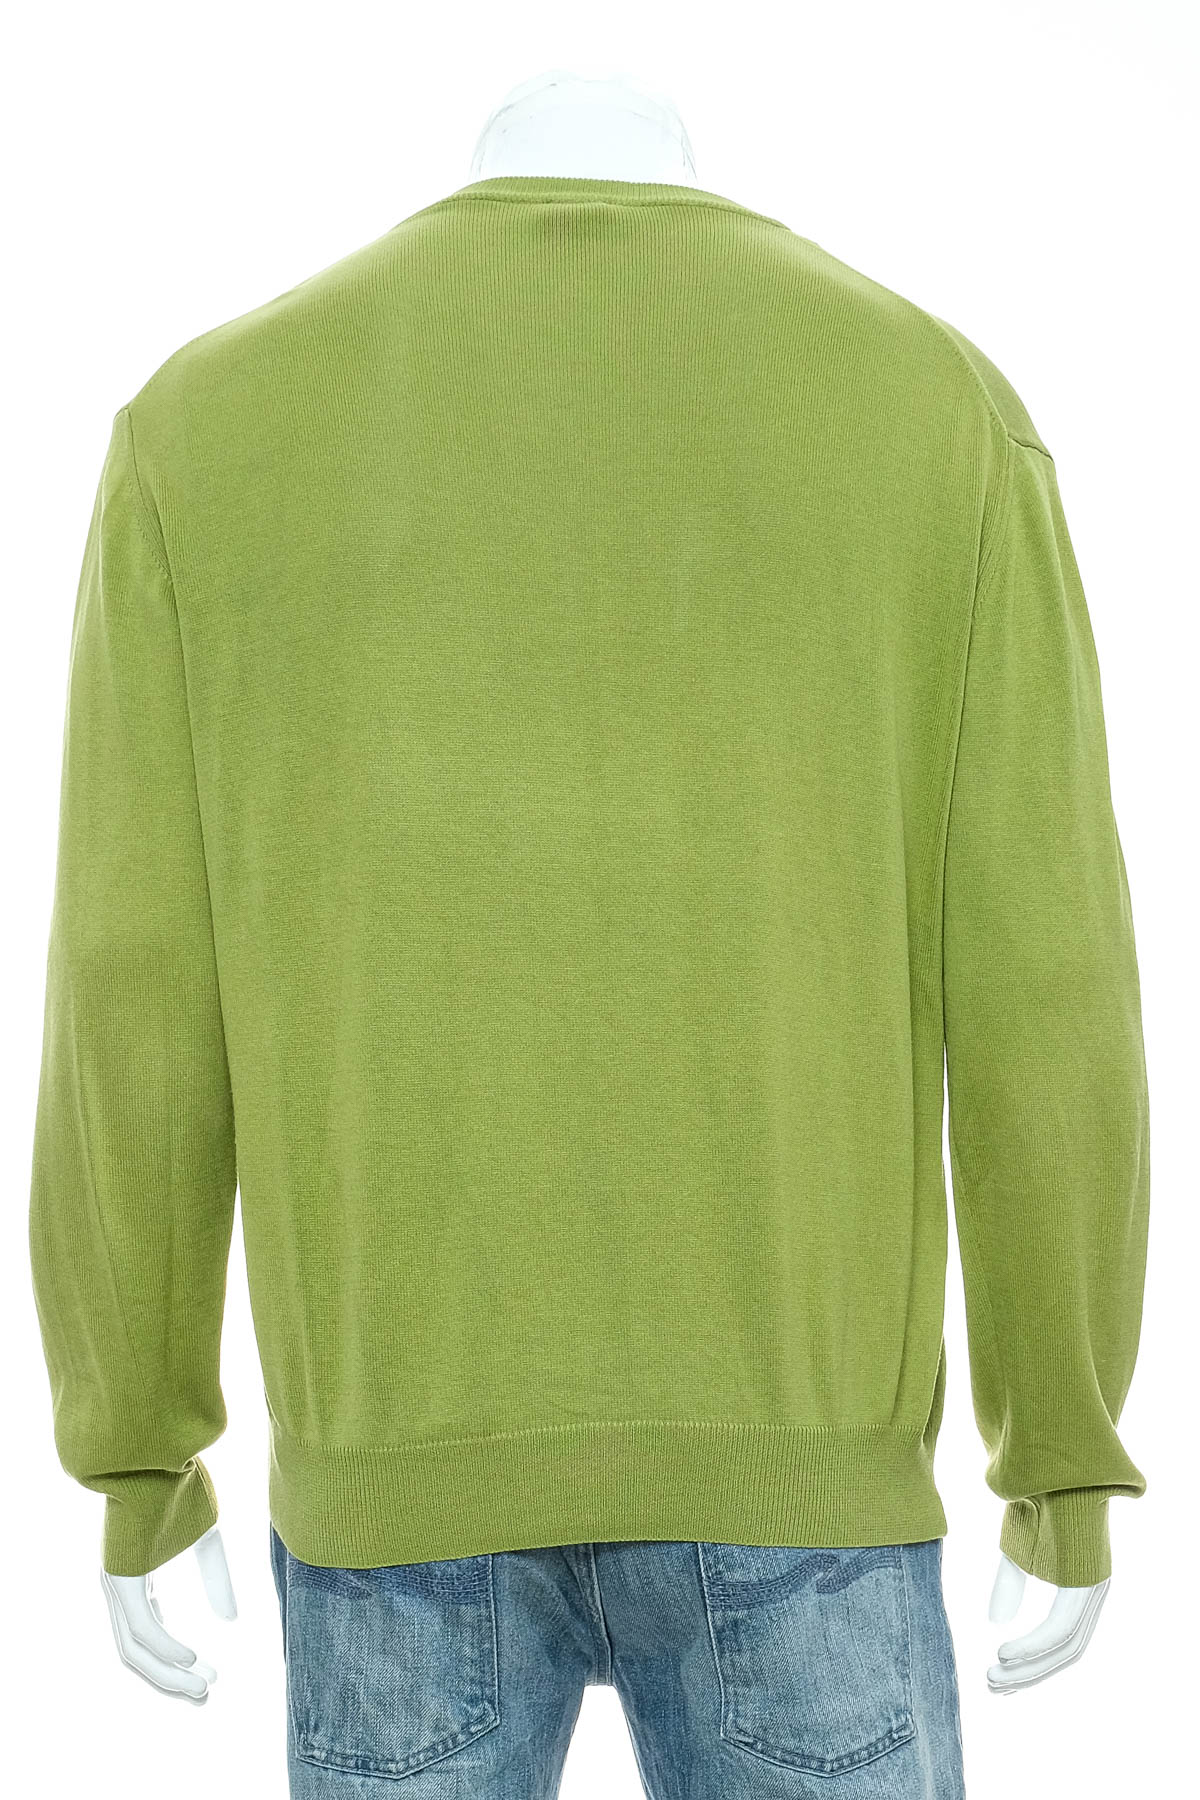 Men's sweater - Engbers - 1